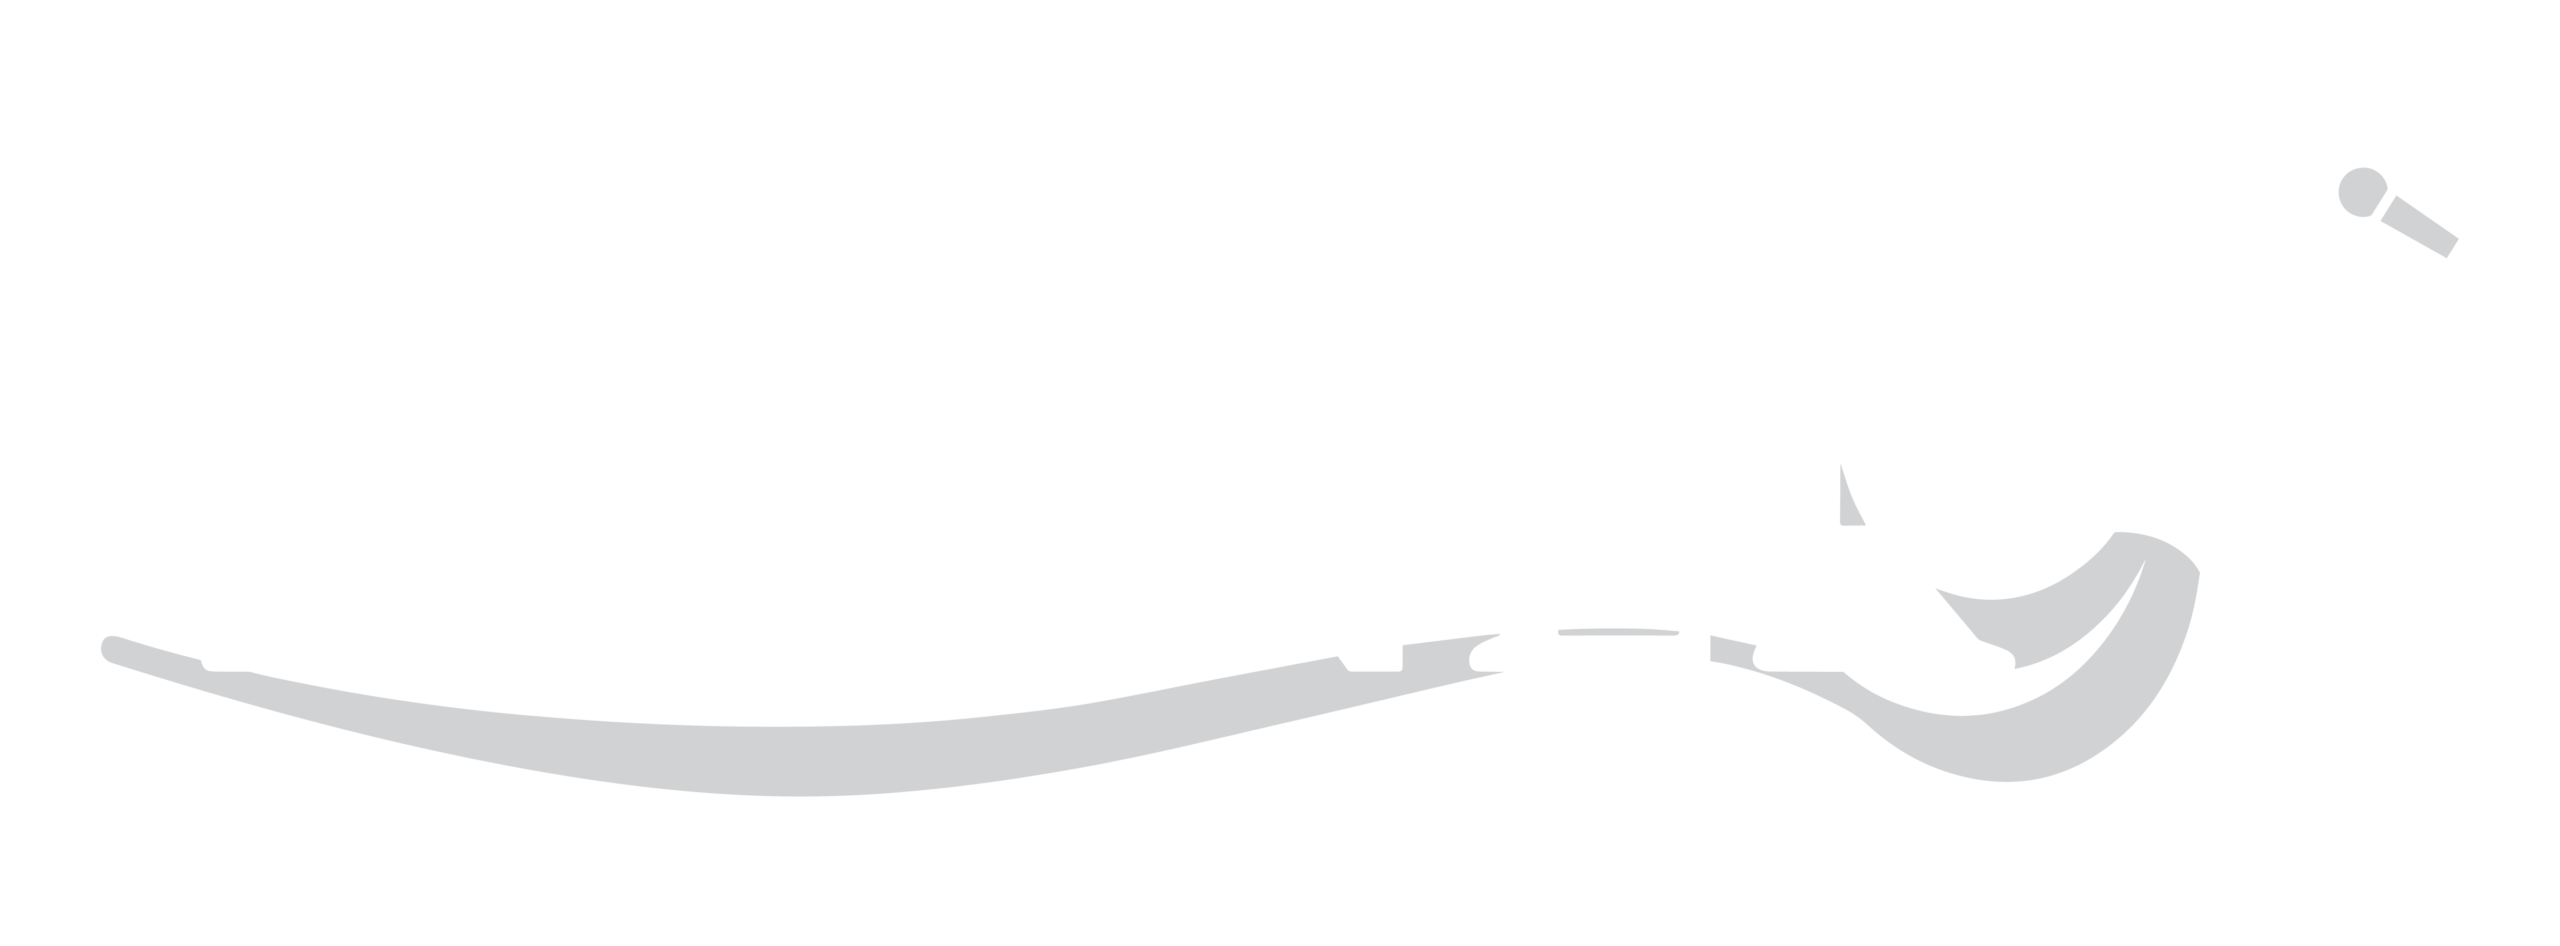 Leadership Trainer Logo-07